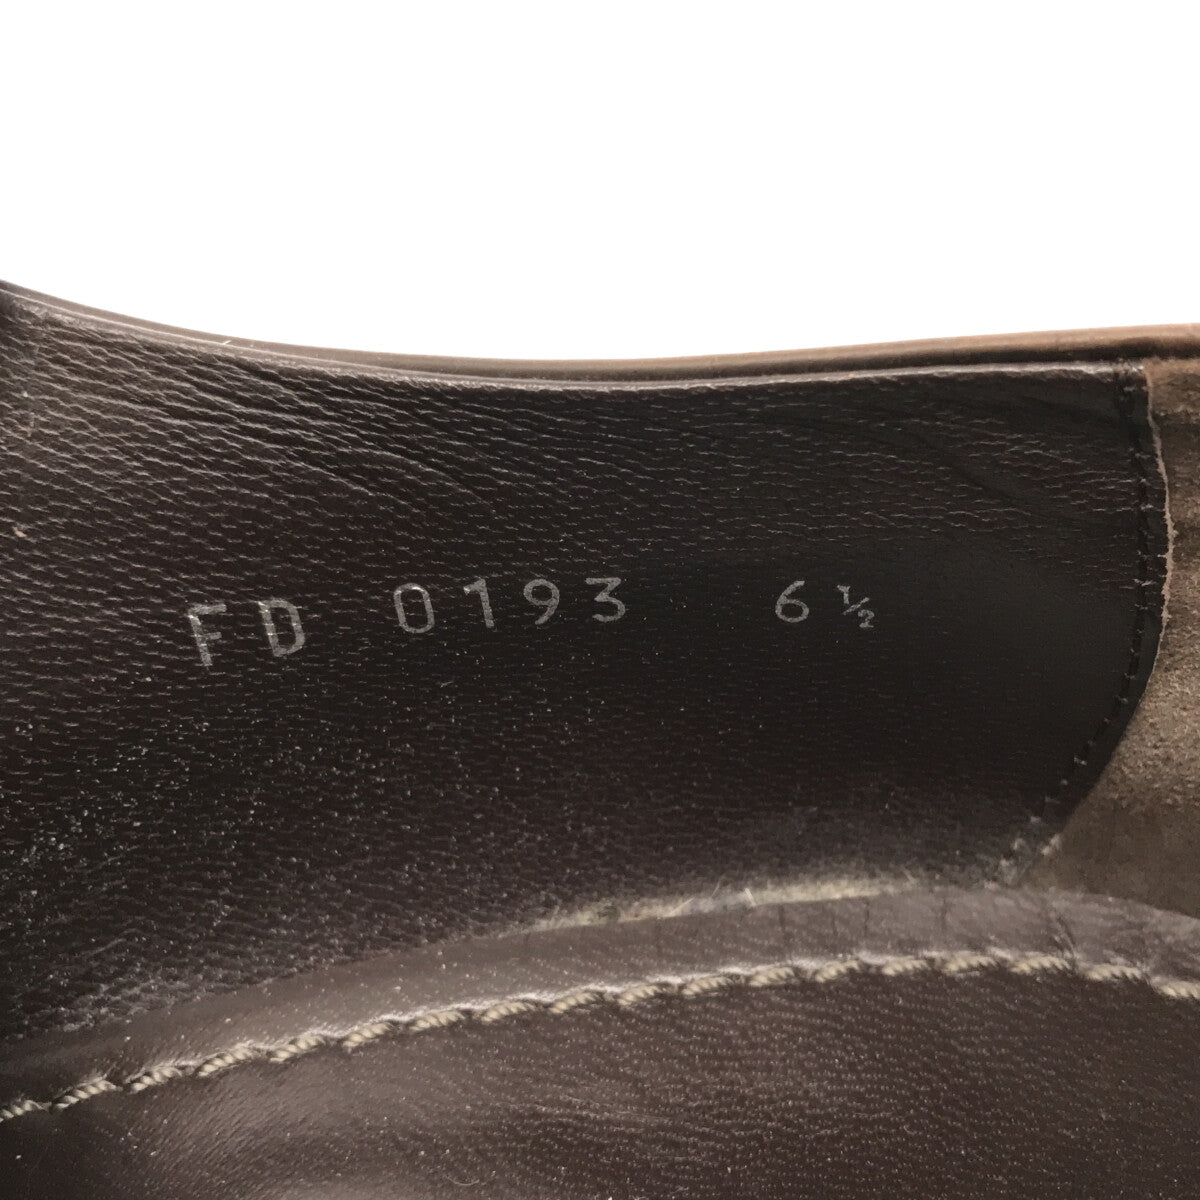 Louis Vuitton / ルイヴィトン | メダリオン レースアップ レザー ドレスシューズ / 革靴 | 6 1/2 |